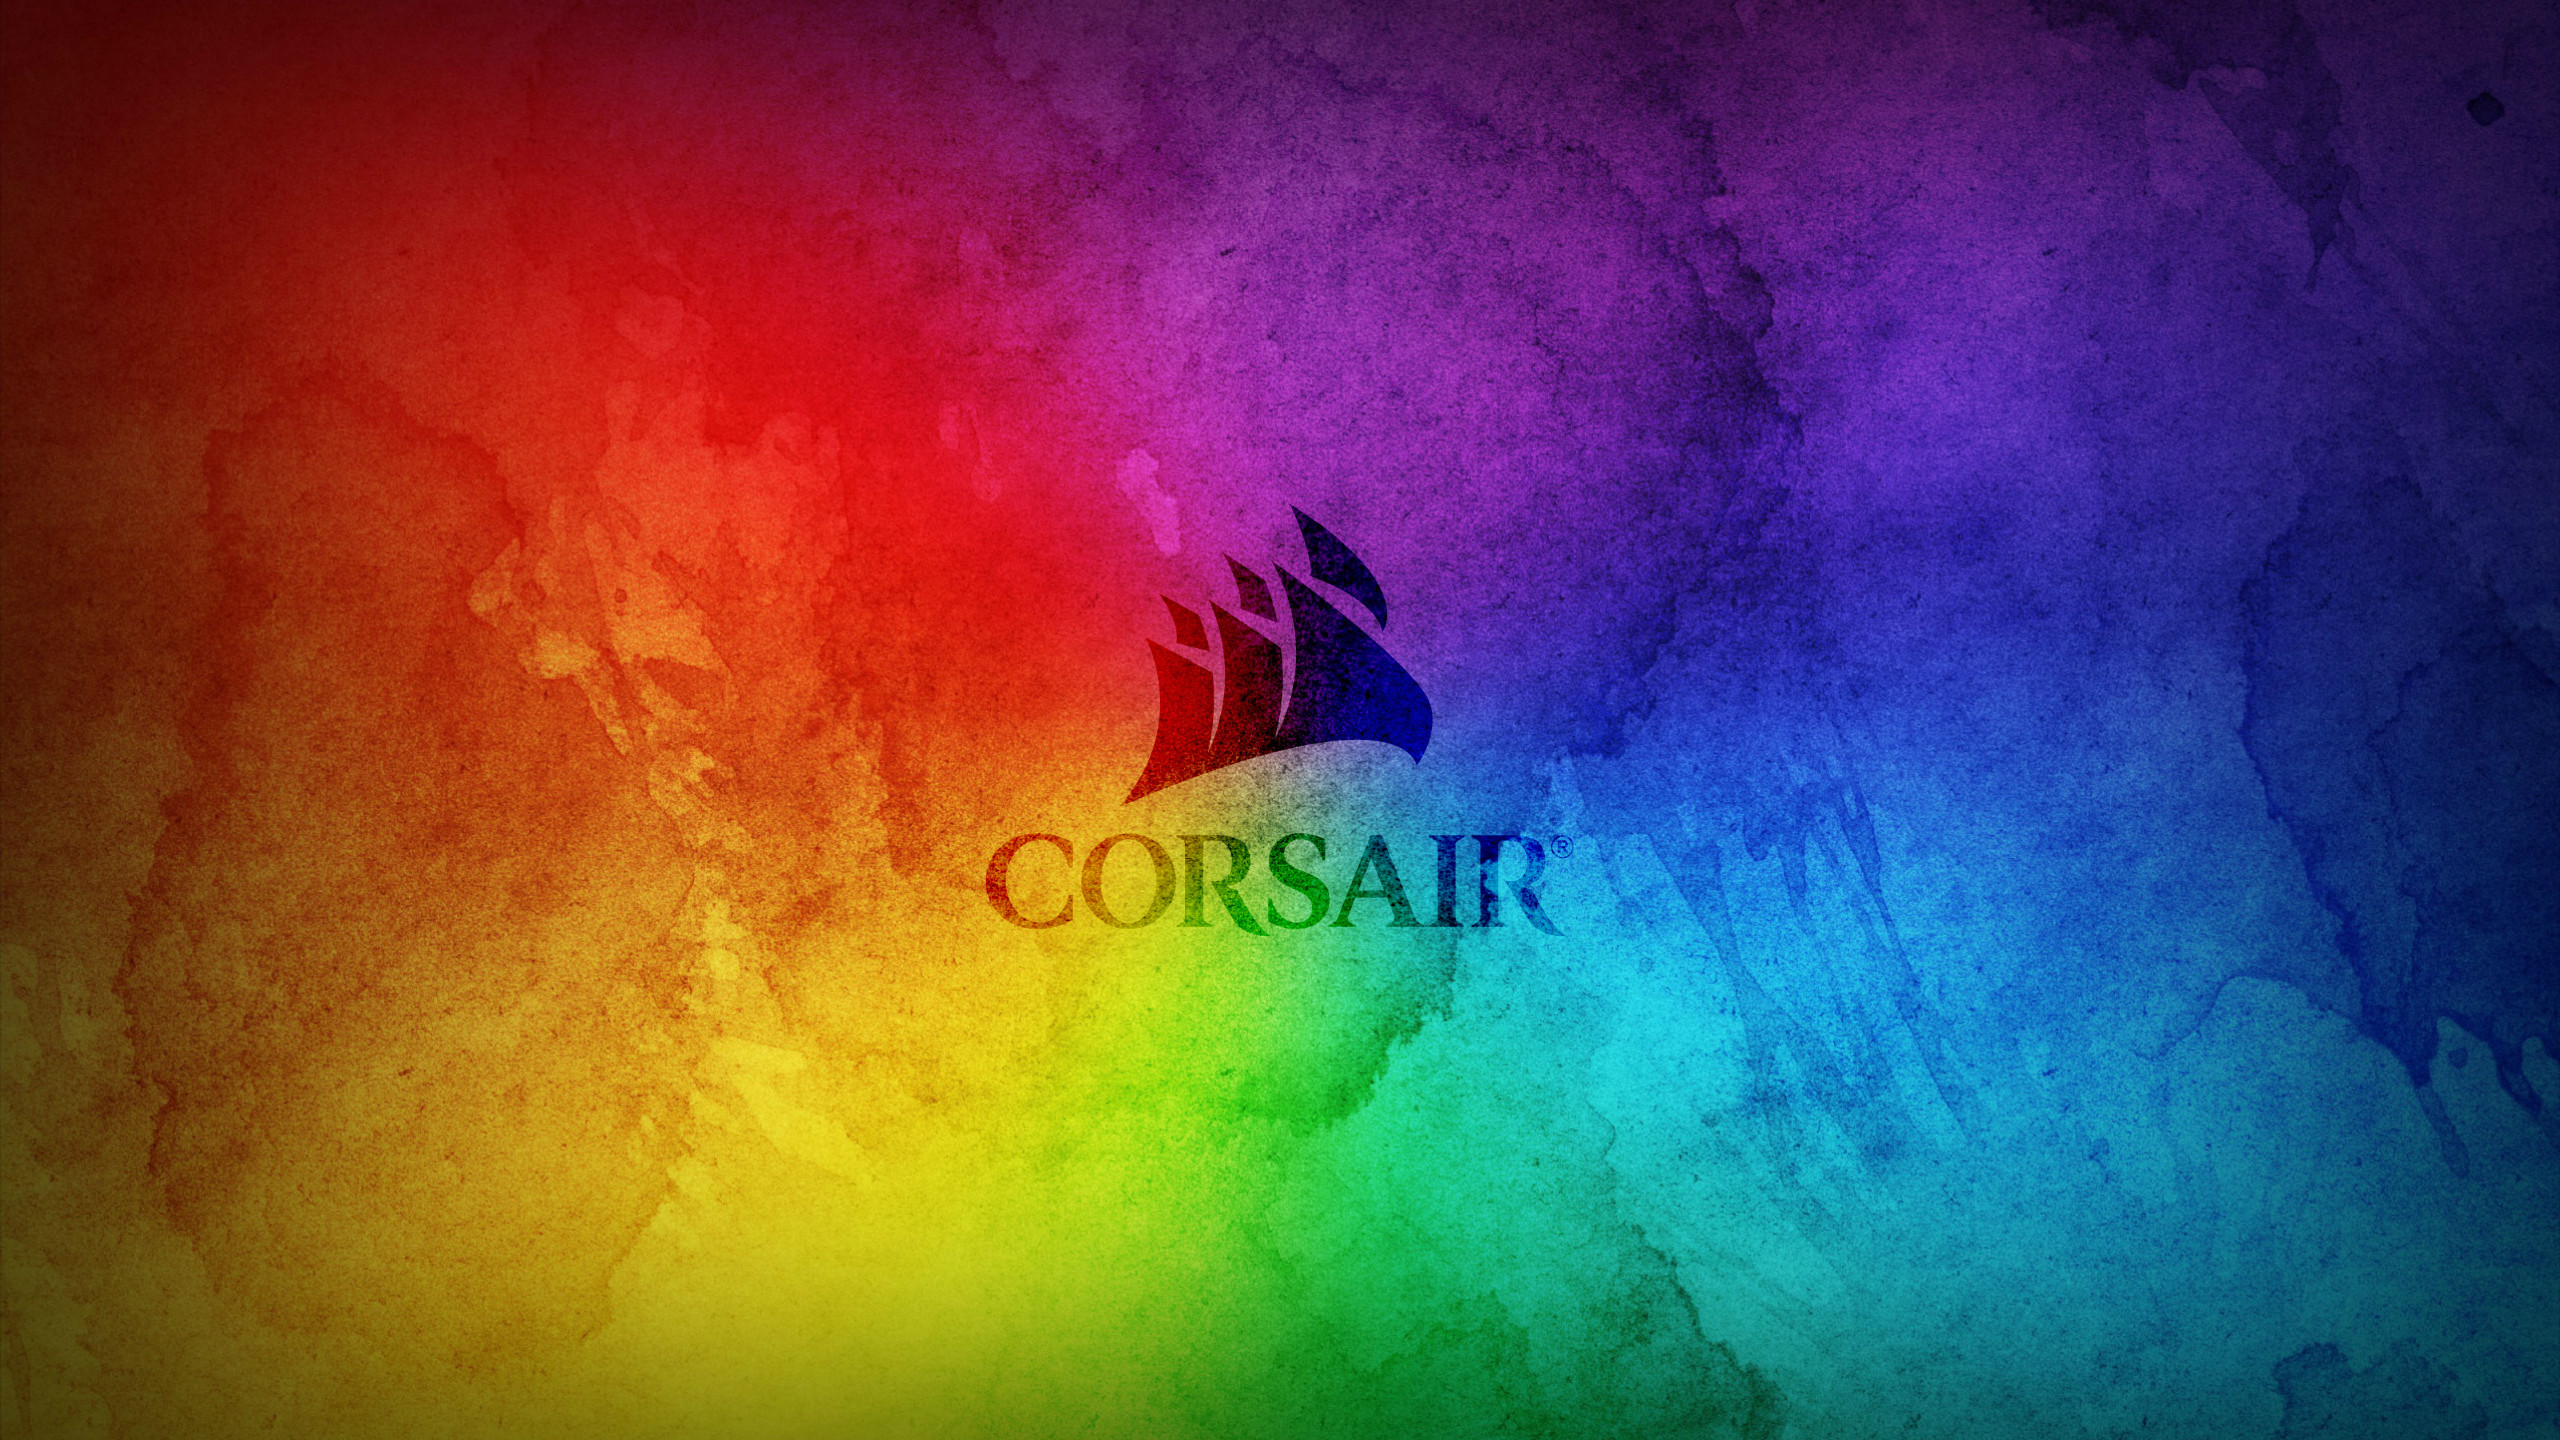 2560x1440 Corsair Rainbow Wallpaper 1440p by Donnesmarcus Corsair Rainbow Wallpaper  1440p by Donnesmarcus